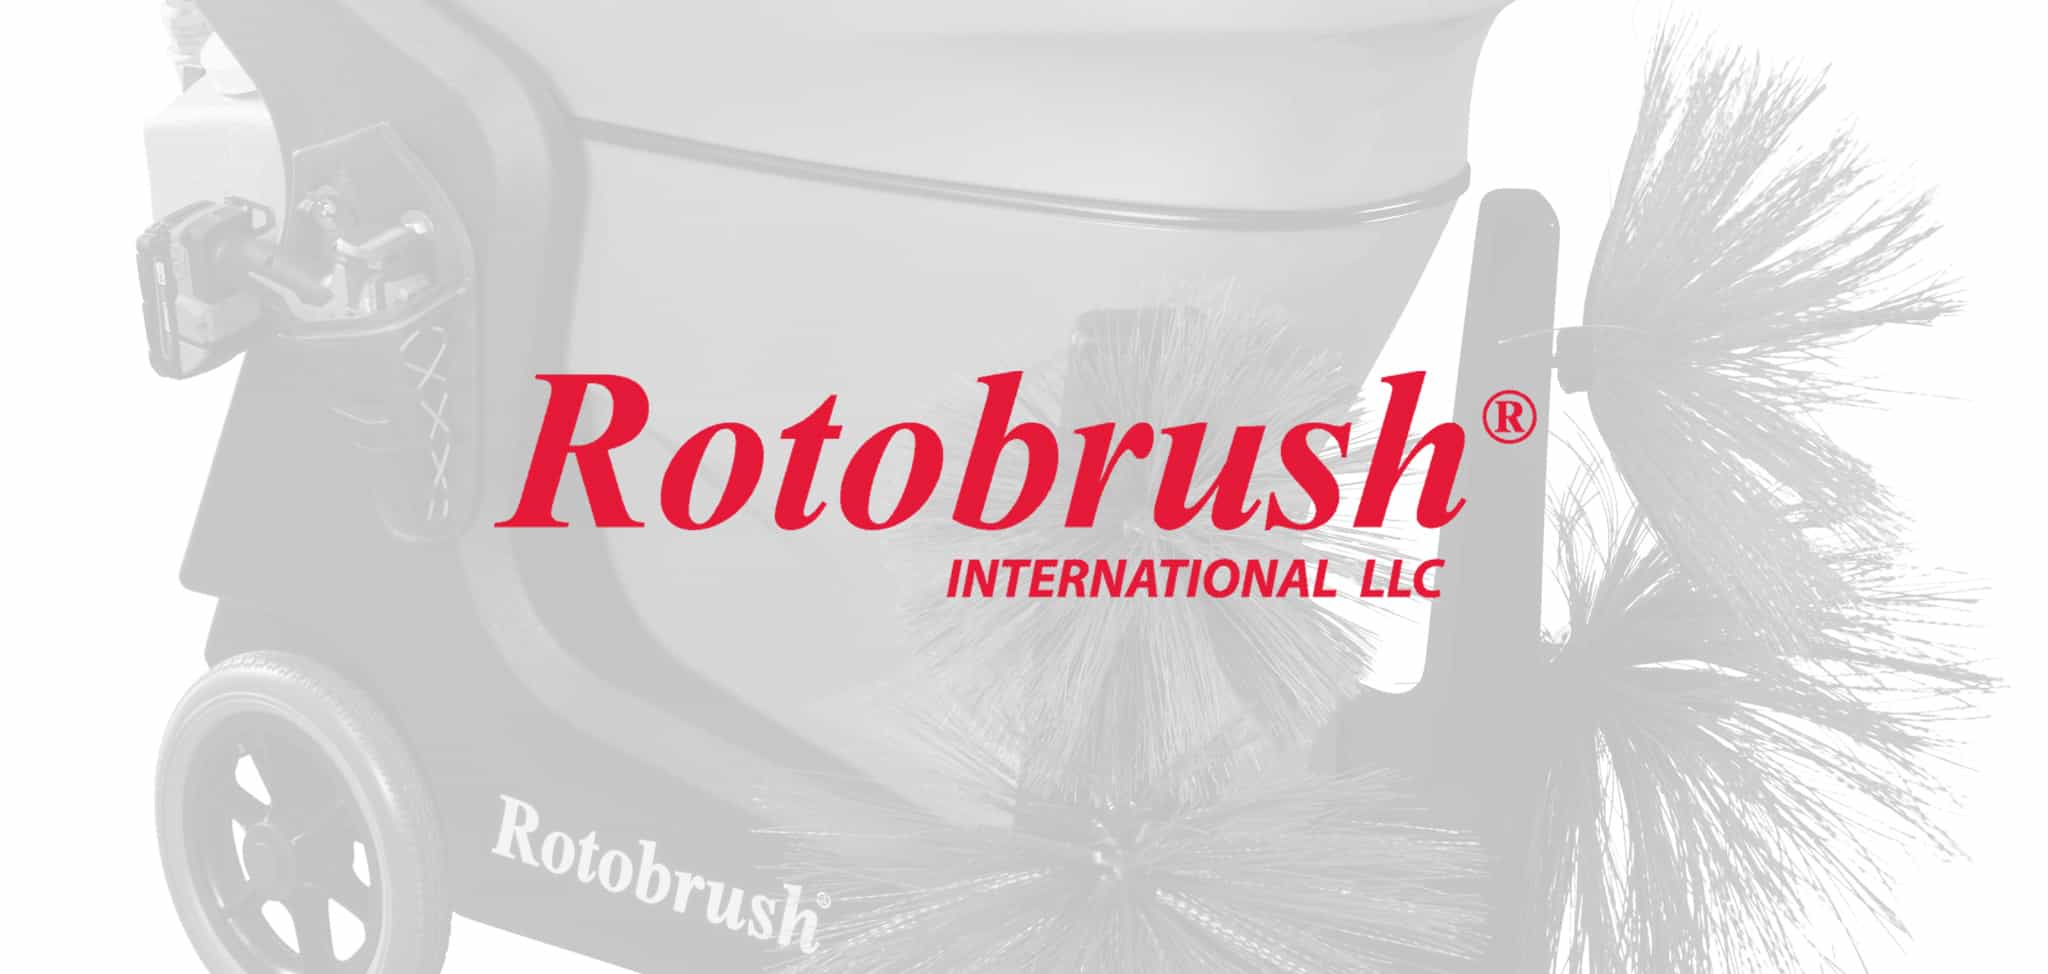 Rotobrush International and Intec Announce Industry Partnership